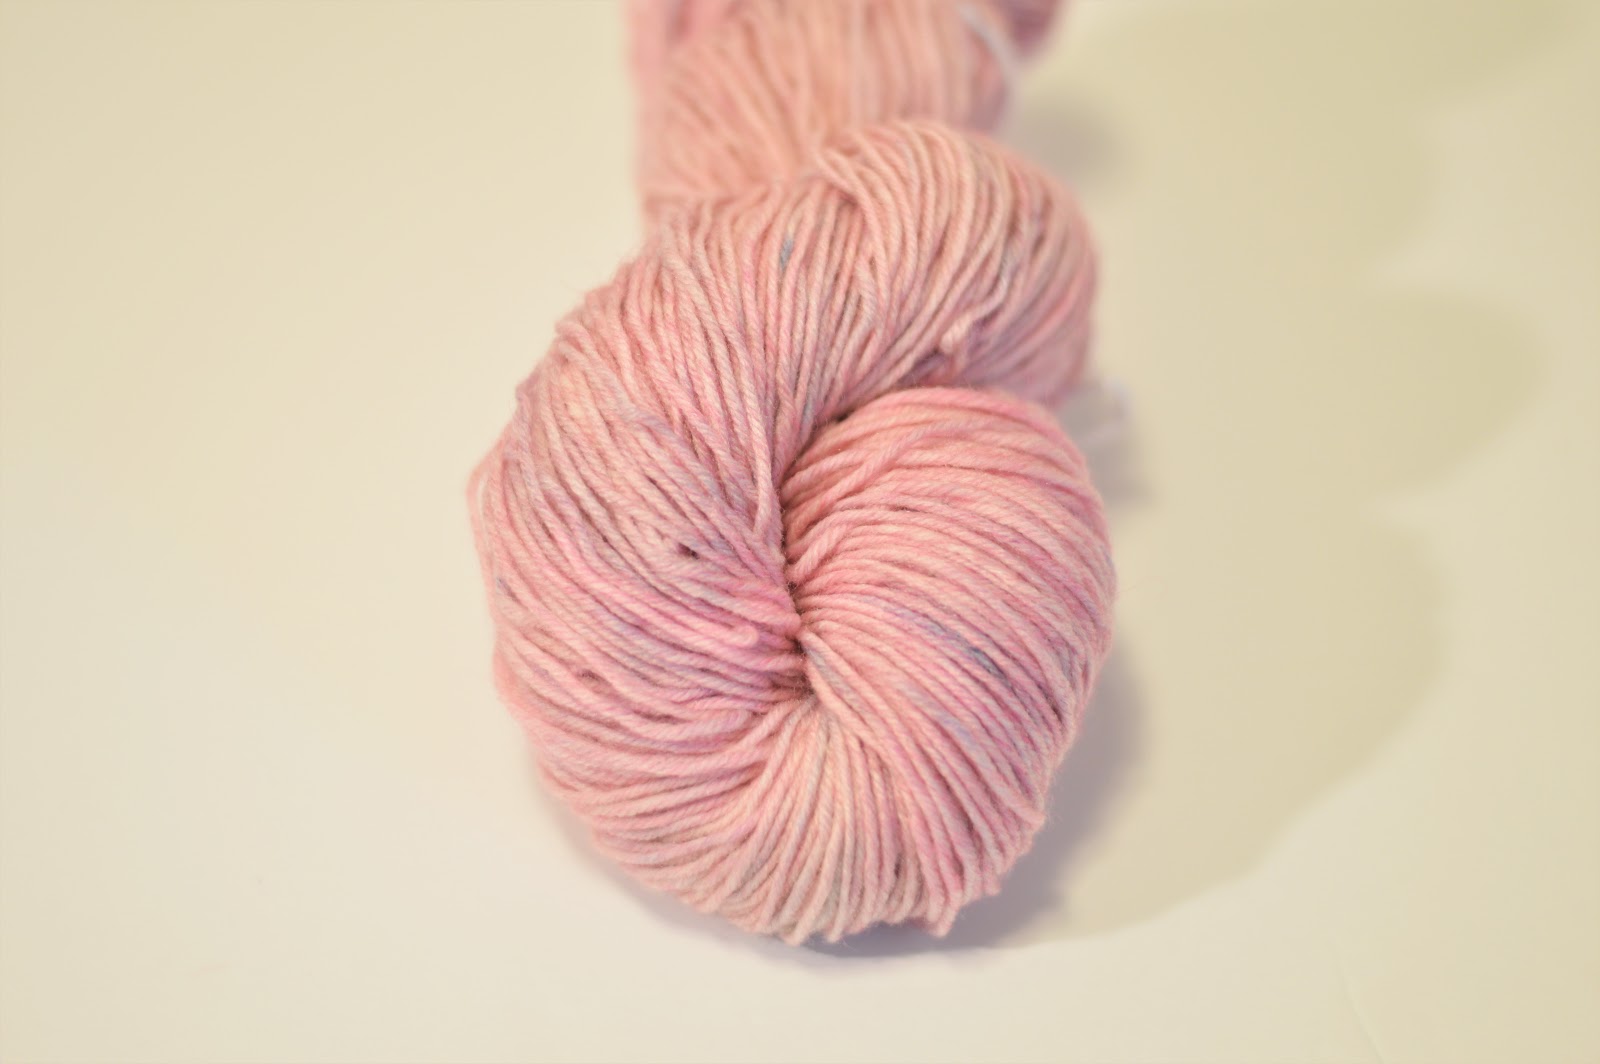 Create Speckled Yarn by Breaking Wilton's Violet Food Coloring 